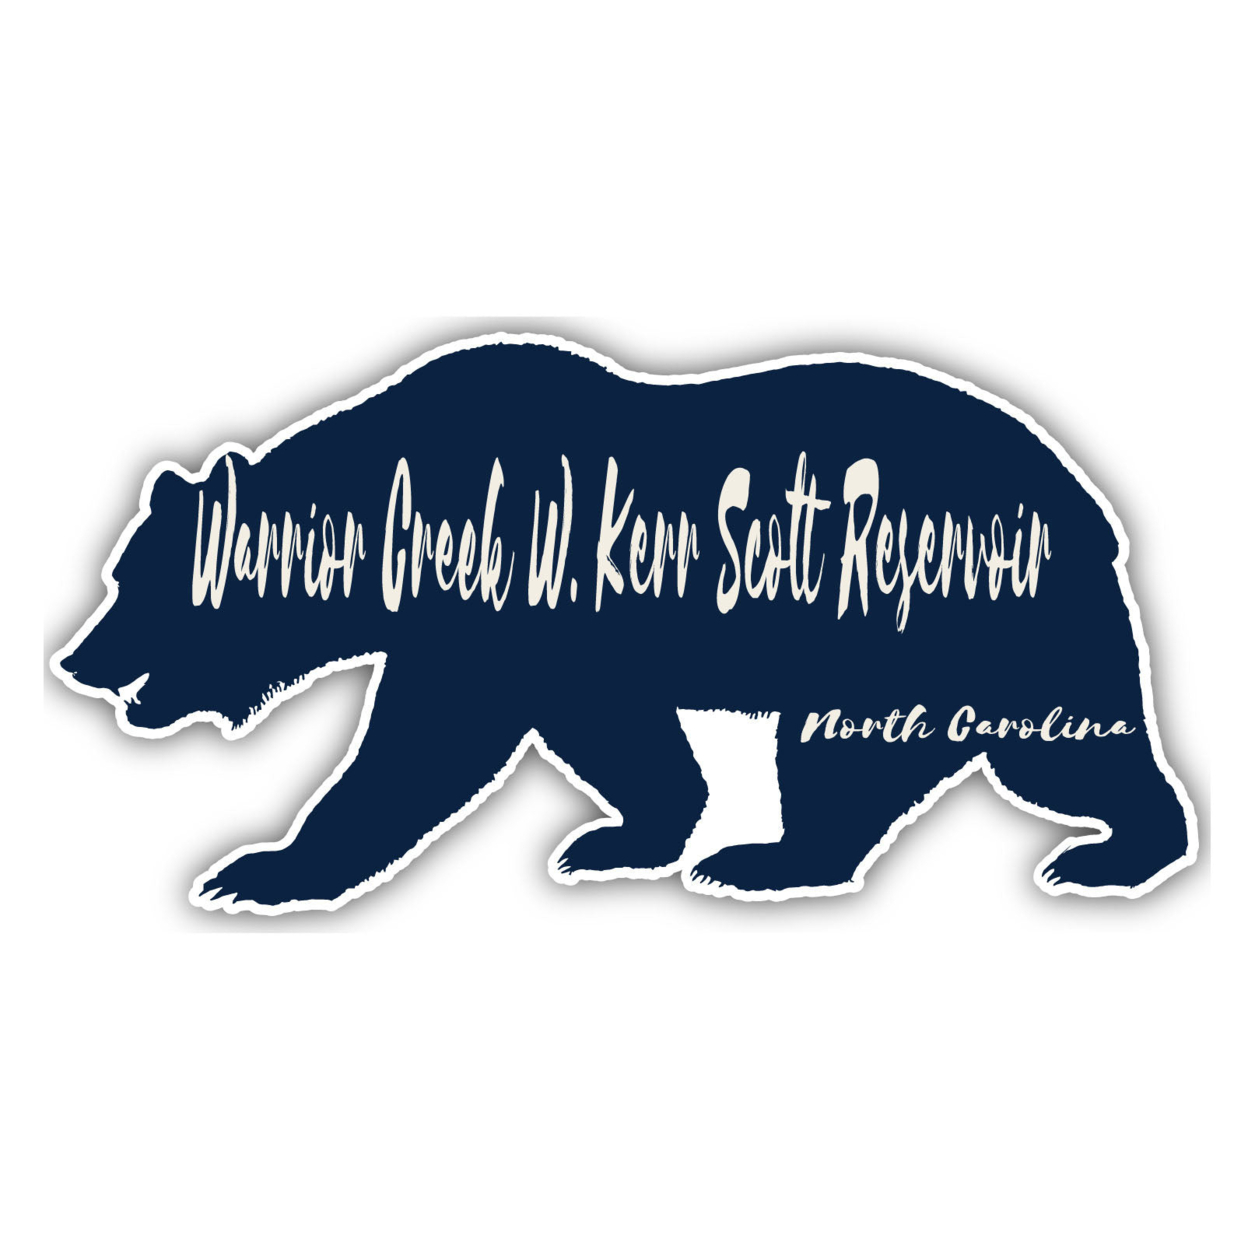 Warrior Creek W. Kerr Scott Reservoir North Carolina Souvenir Decorative Stickers (Choose Theme And Size) - Single Unit, 4-Inch, Bear